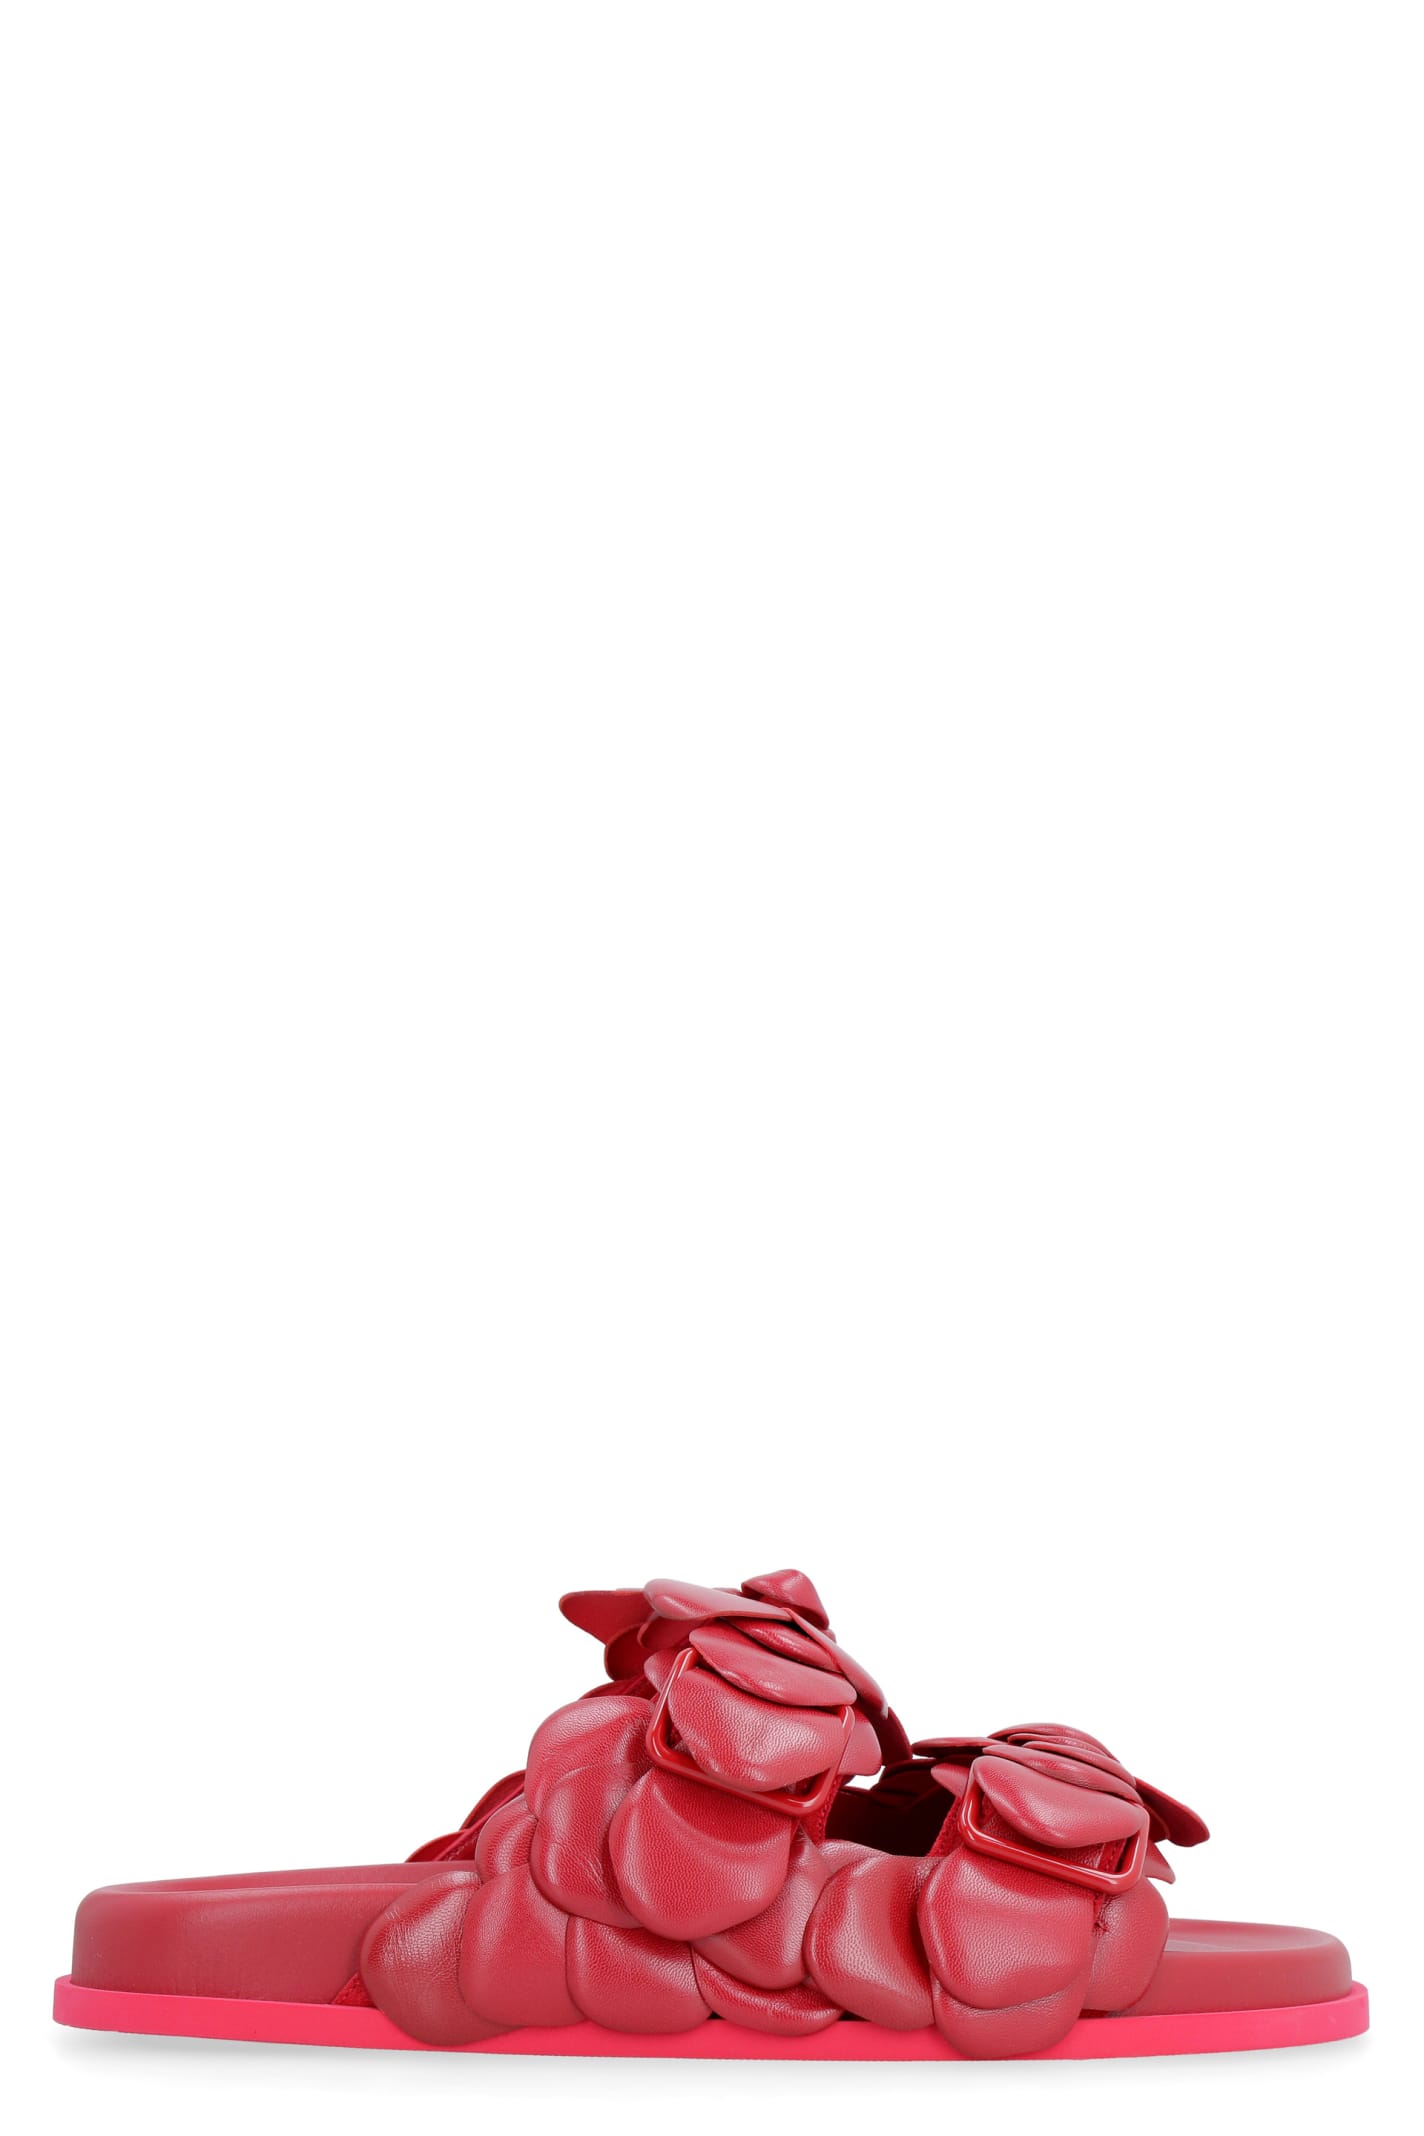 Valentino Garavani - Atelier Shoes 03 Rose Edition Leather Slides